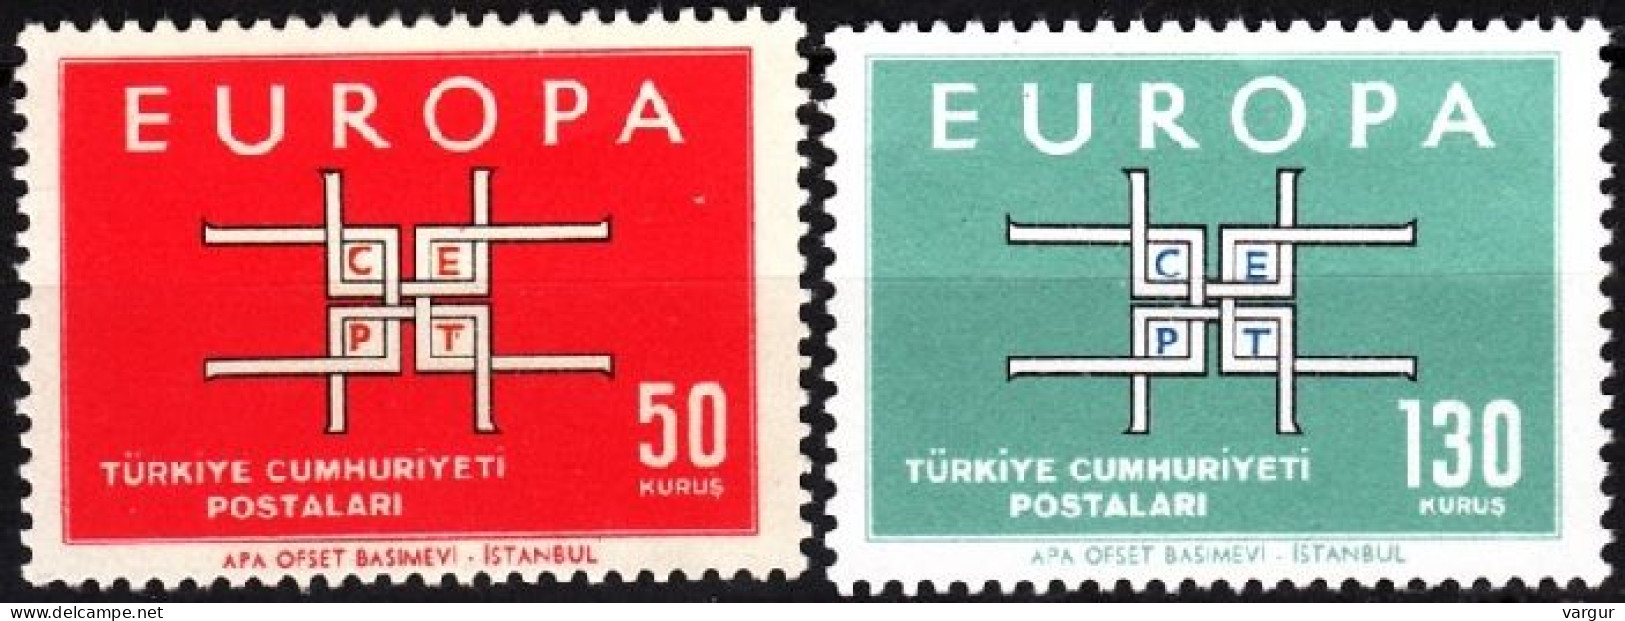 TURKEY 1963 EUROPA. Complete Set, MNH - 1963